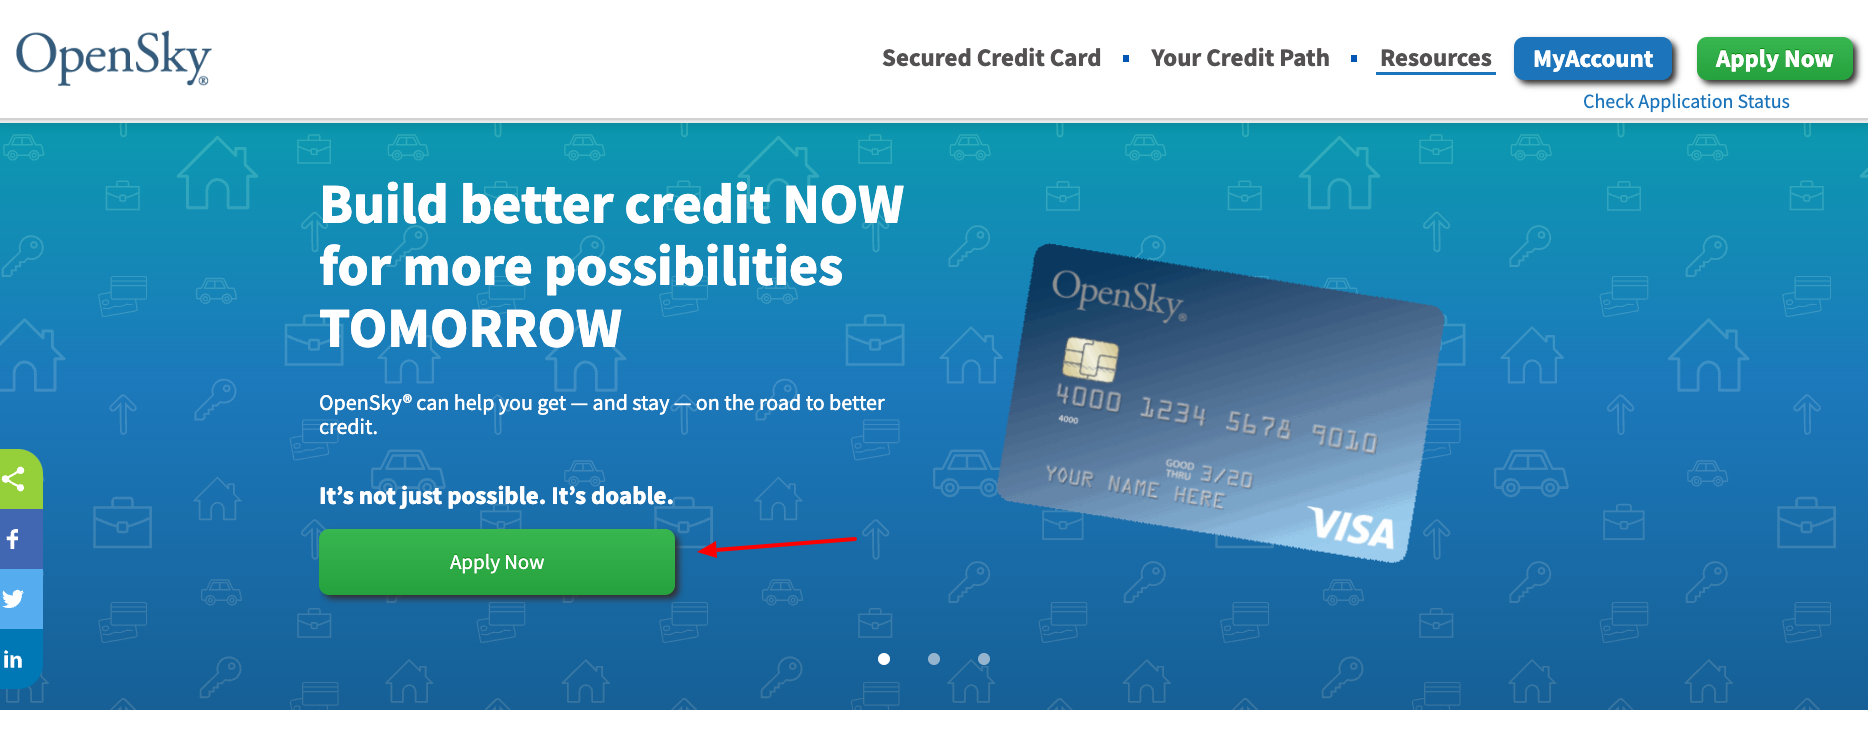 opensky credit card apply